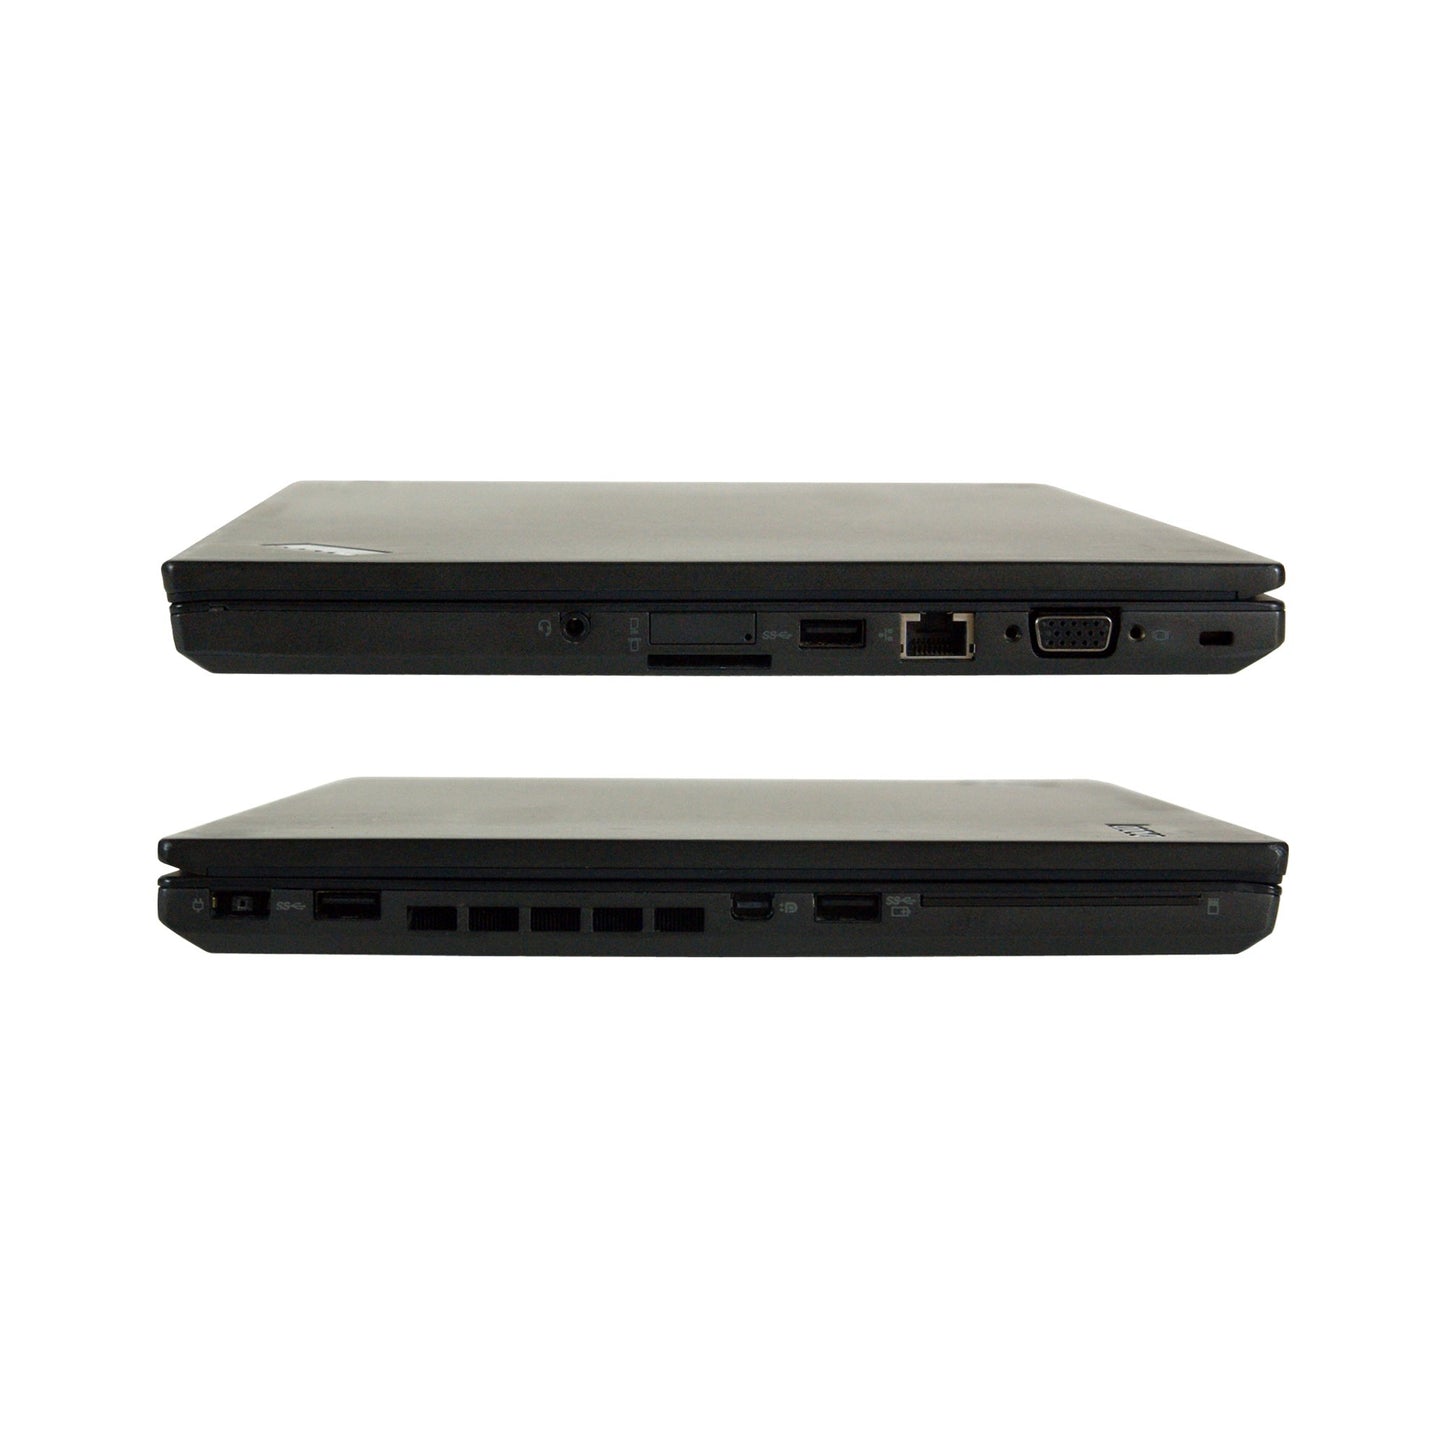 Lenovo ThinkPad T450 14in Laptop, Core i5-5300U 2.3GHz, 8GB Ram, 500GB HDD, Windows 10 Pro 64bit, Webcam (Renewed)